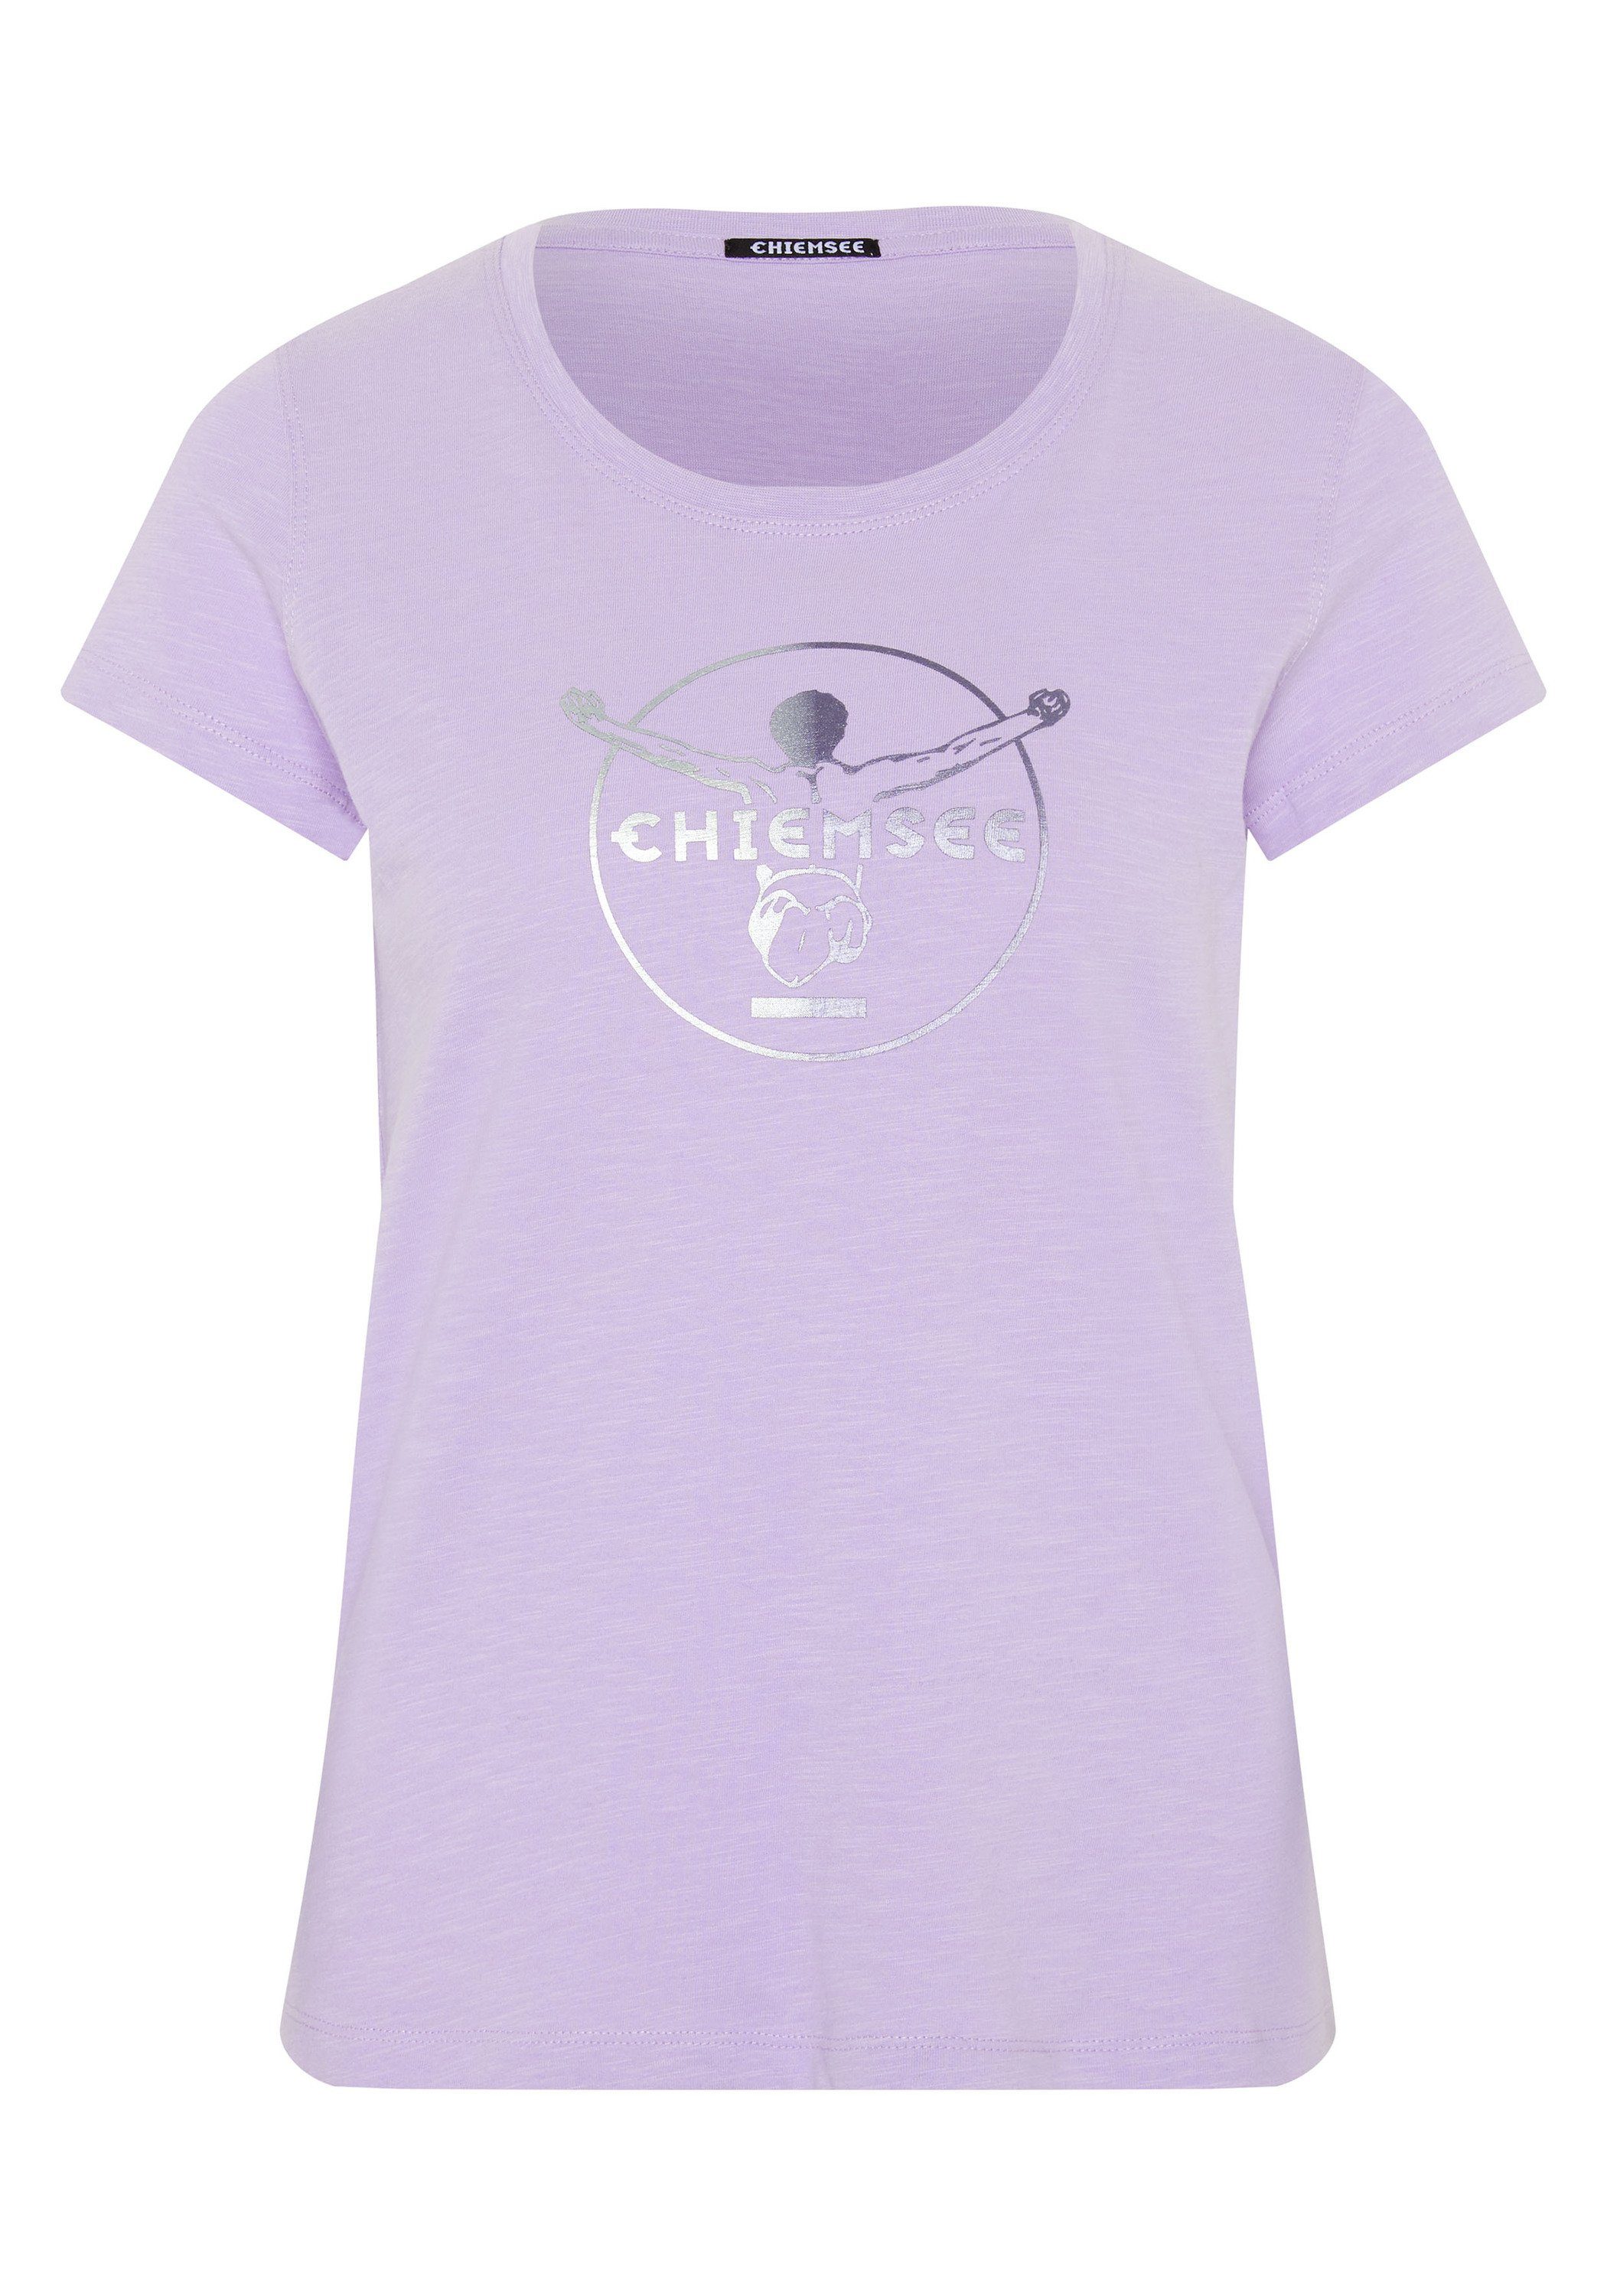 Print-Shirt 15-3716 Jumper-Frontprint Purple Rose T-Shirt mit 1 Chiemsee